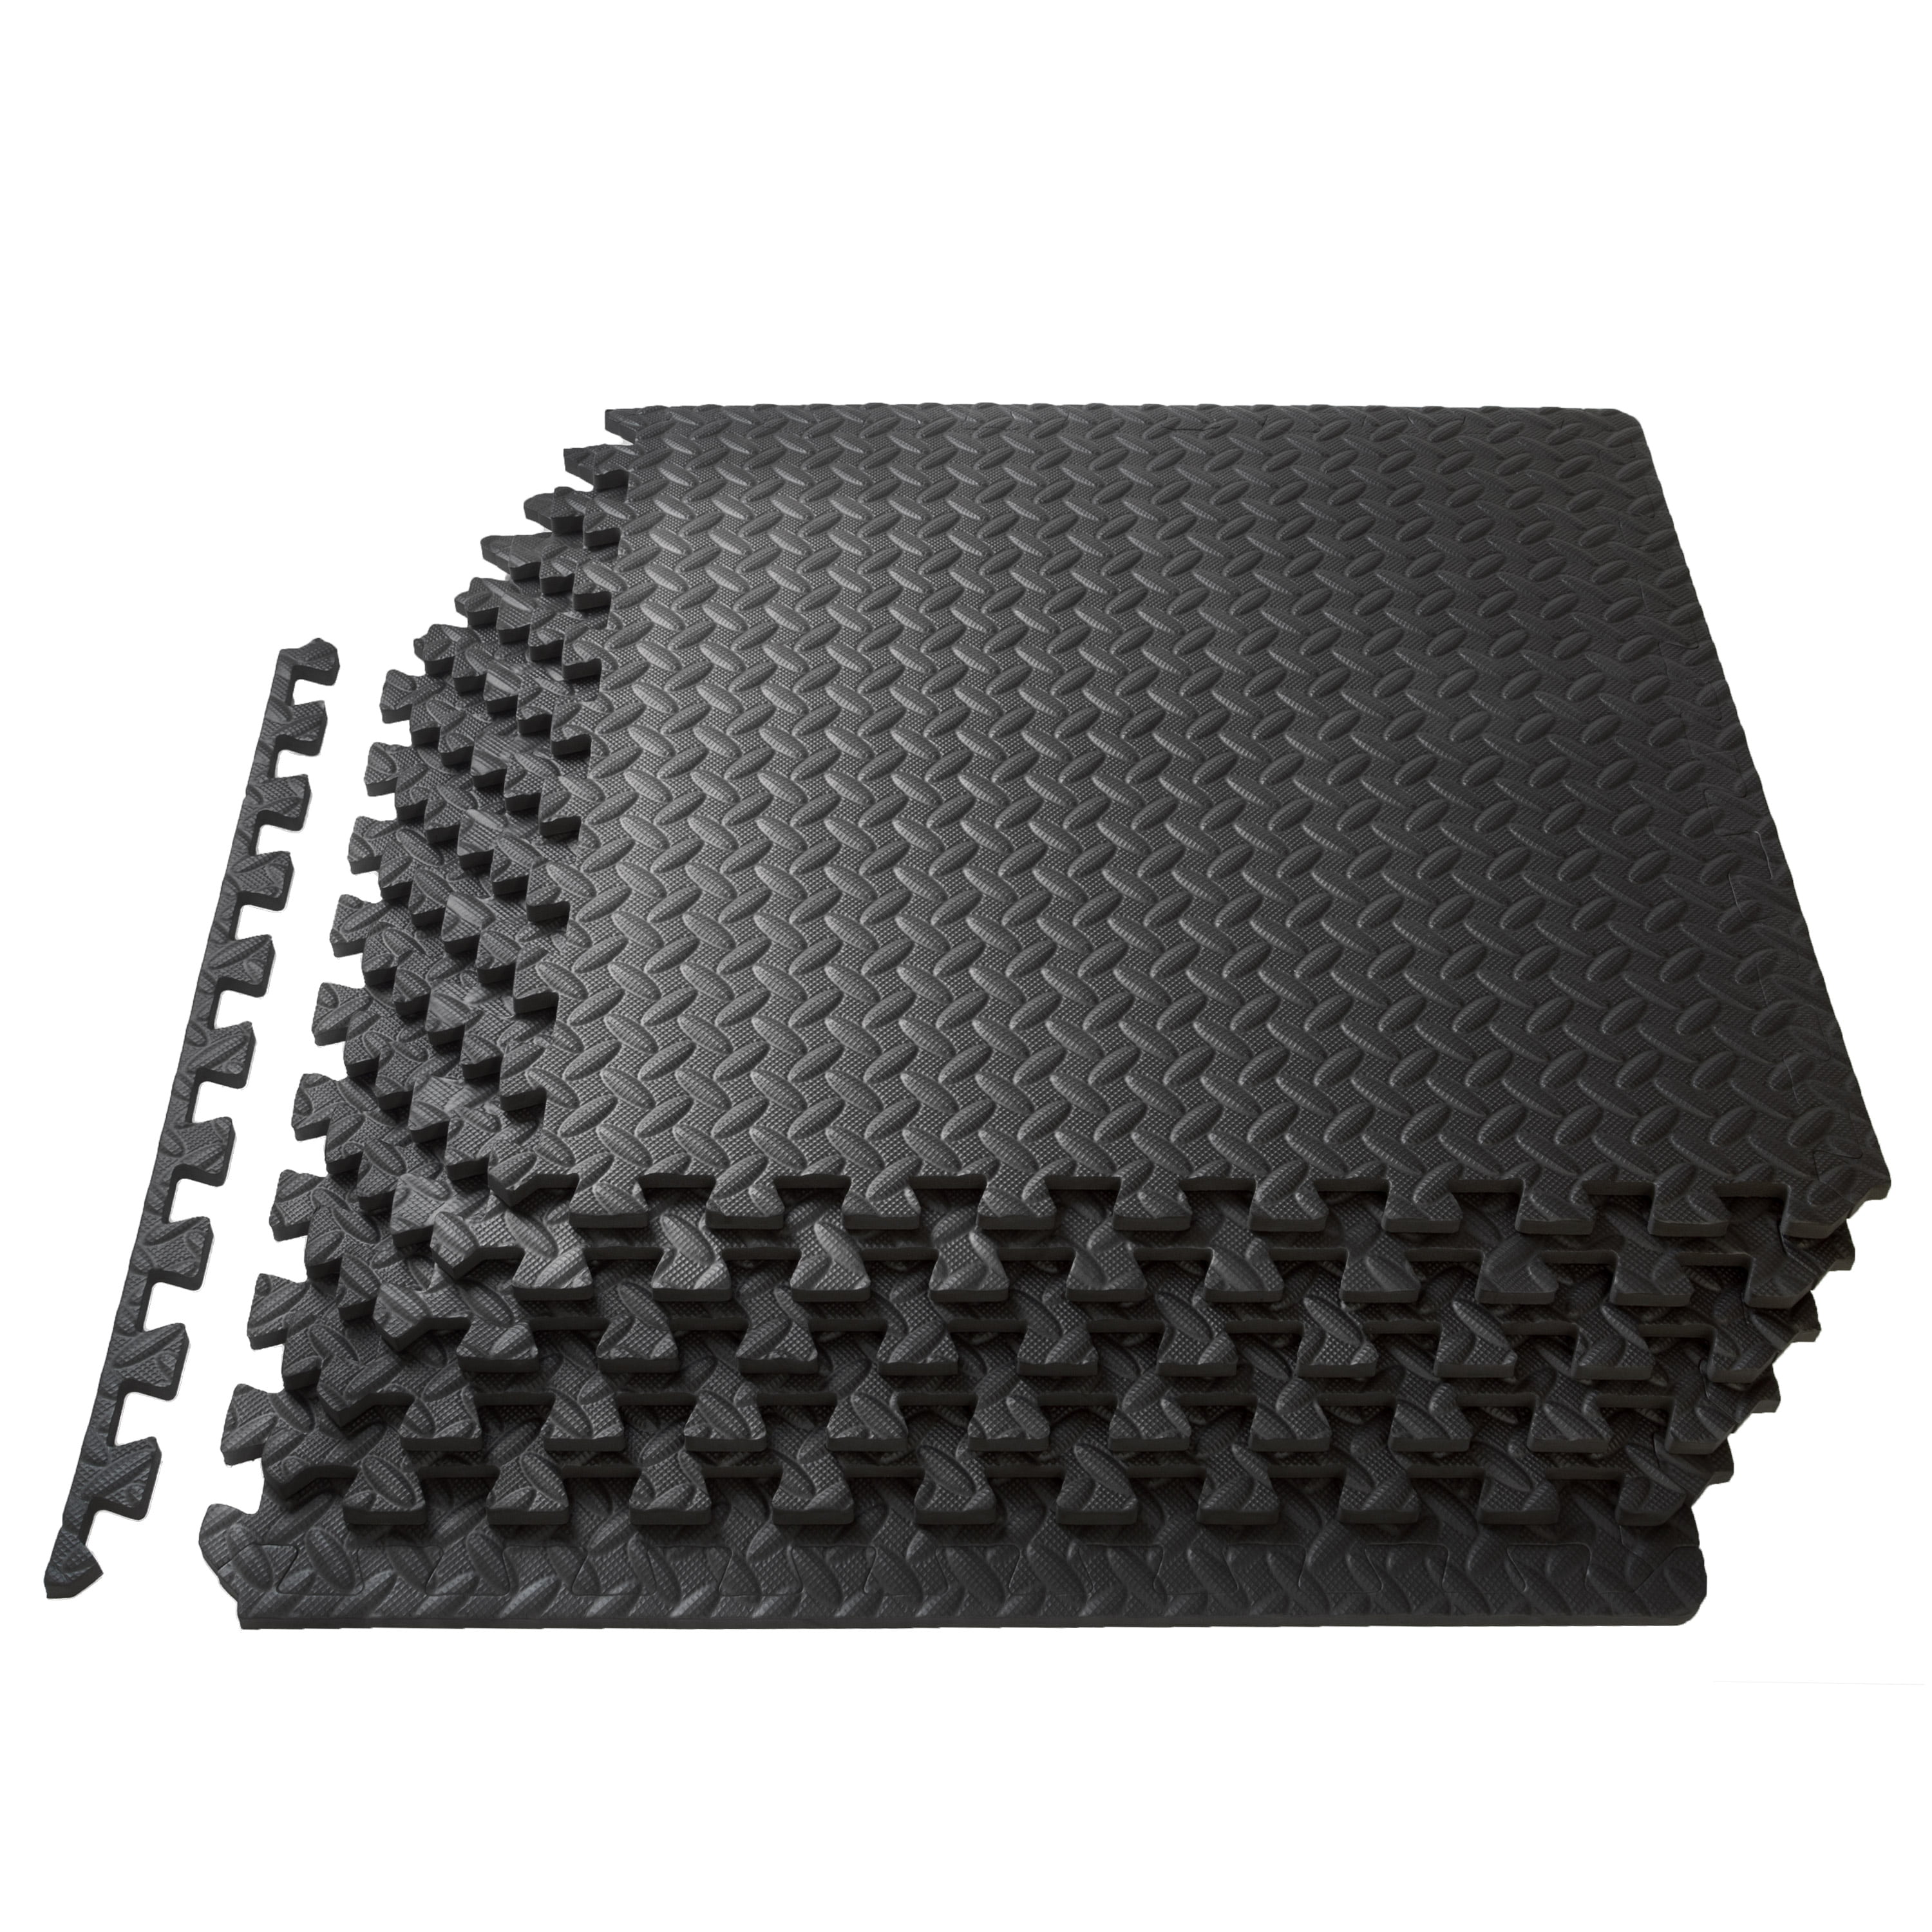 Prosourcefit Puzzle Exercise Mat 1 2, Foam Mat Floor Tiles Interlocking Eva Foam Padding By Stalwart